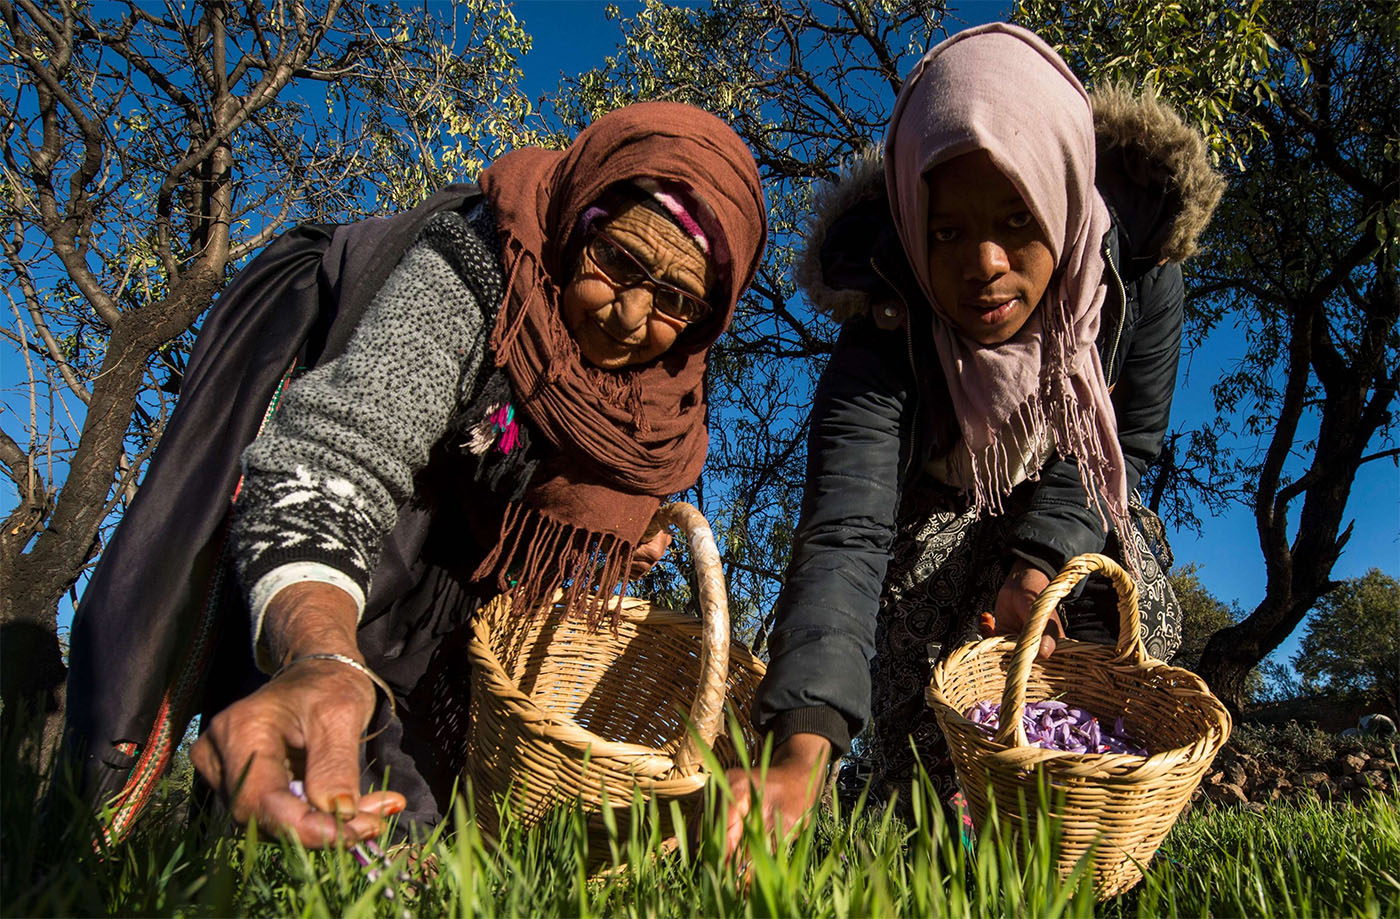 Female labourers pick saffron flowers in Taliouine